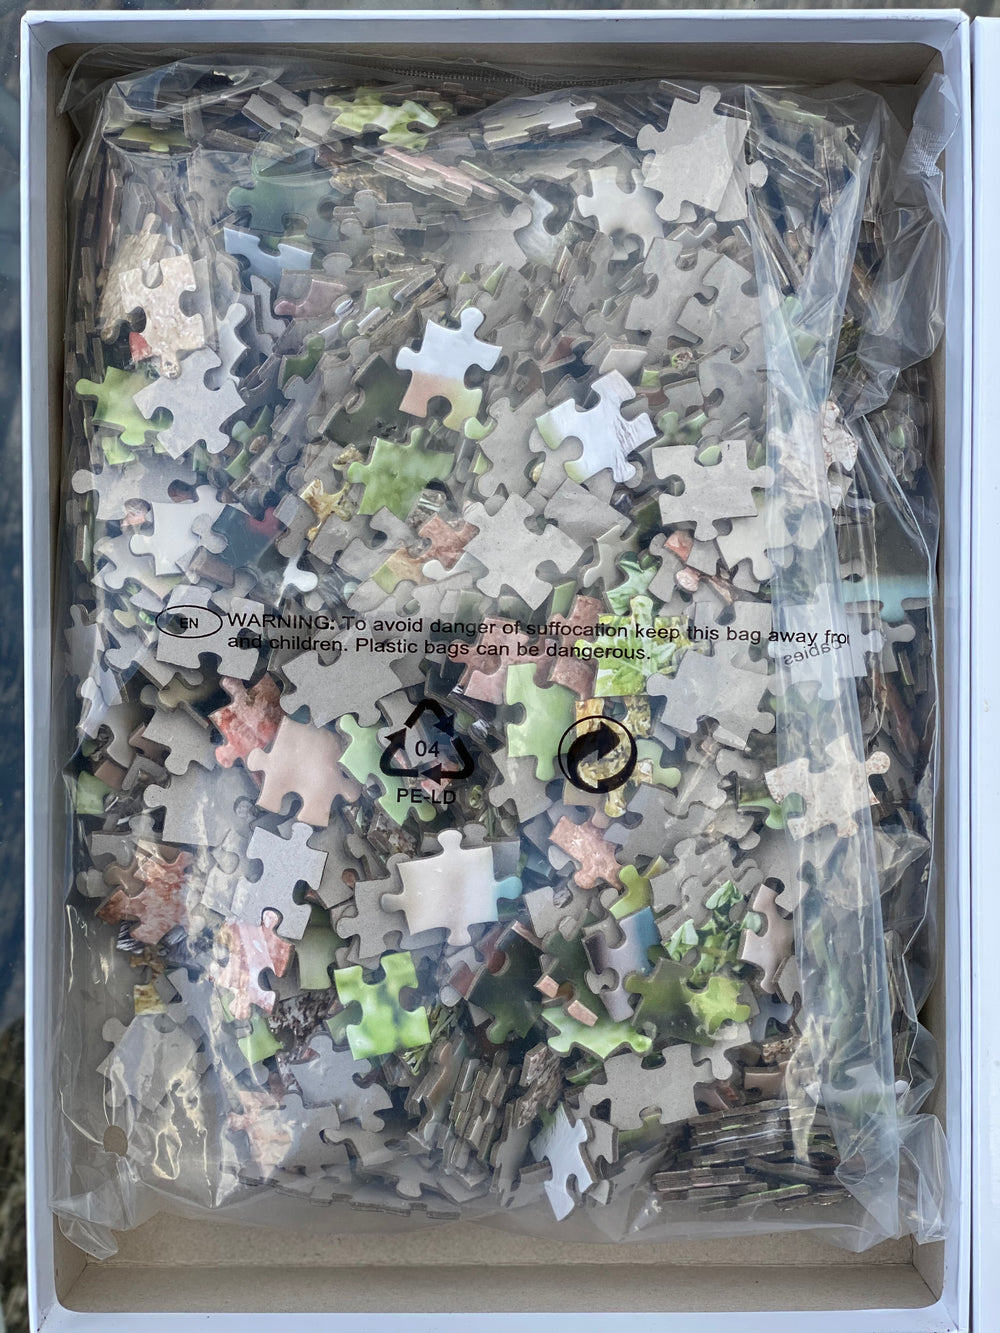 300 Piece Jigsaw Puzzle | Spring Chicks | MODERATE